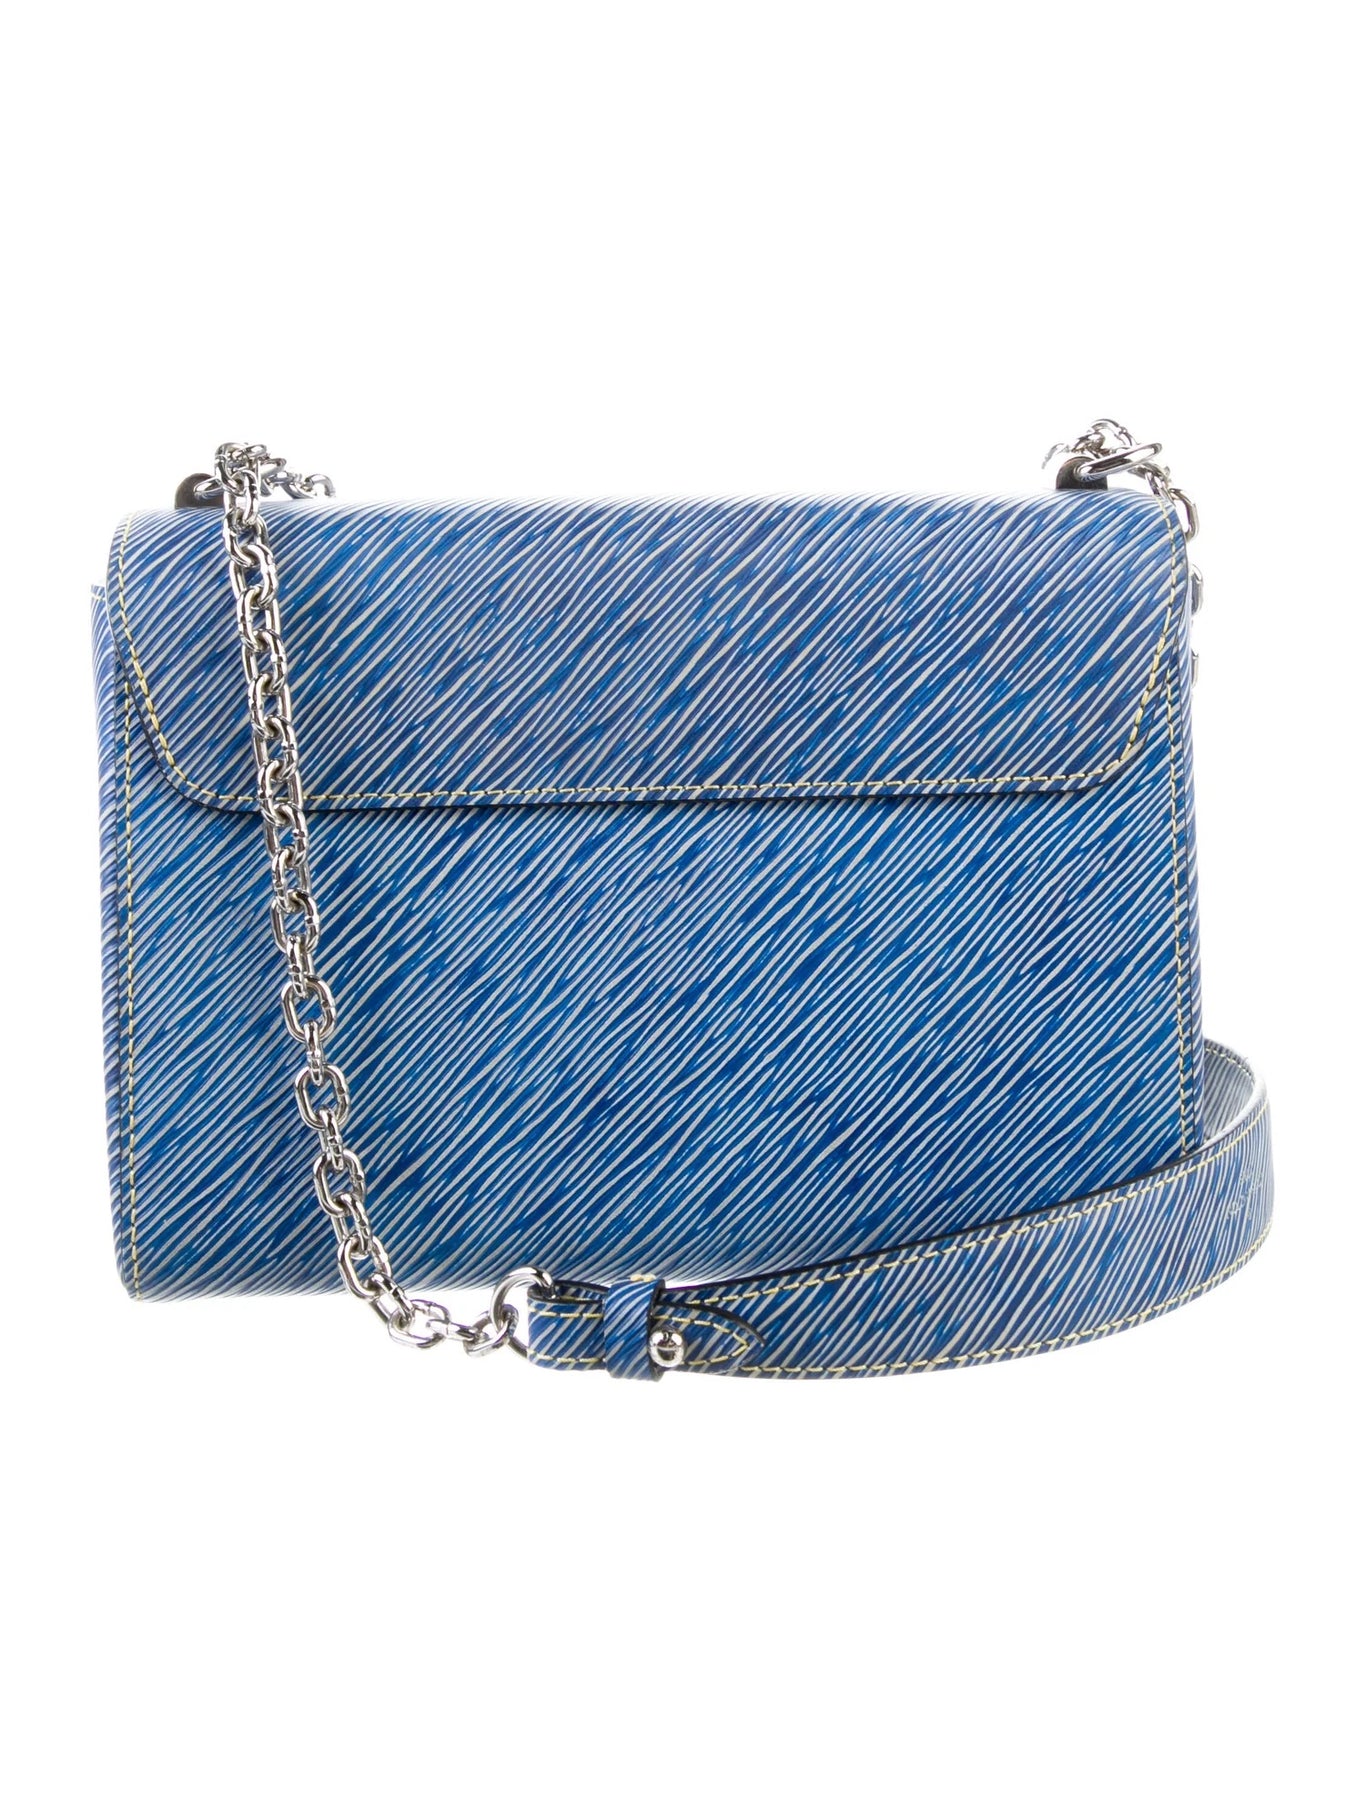 Pin on Louis Vuitton handbags&bags